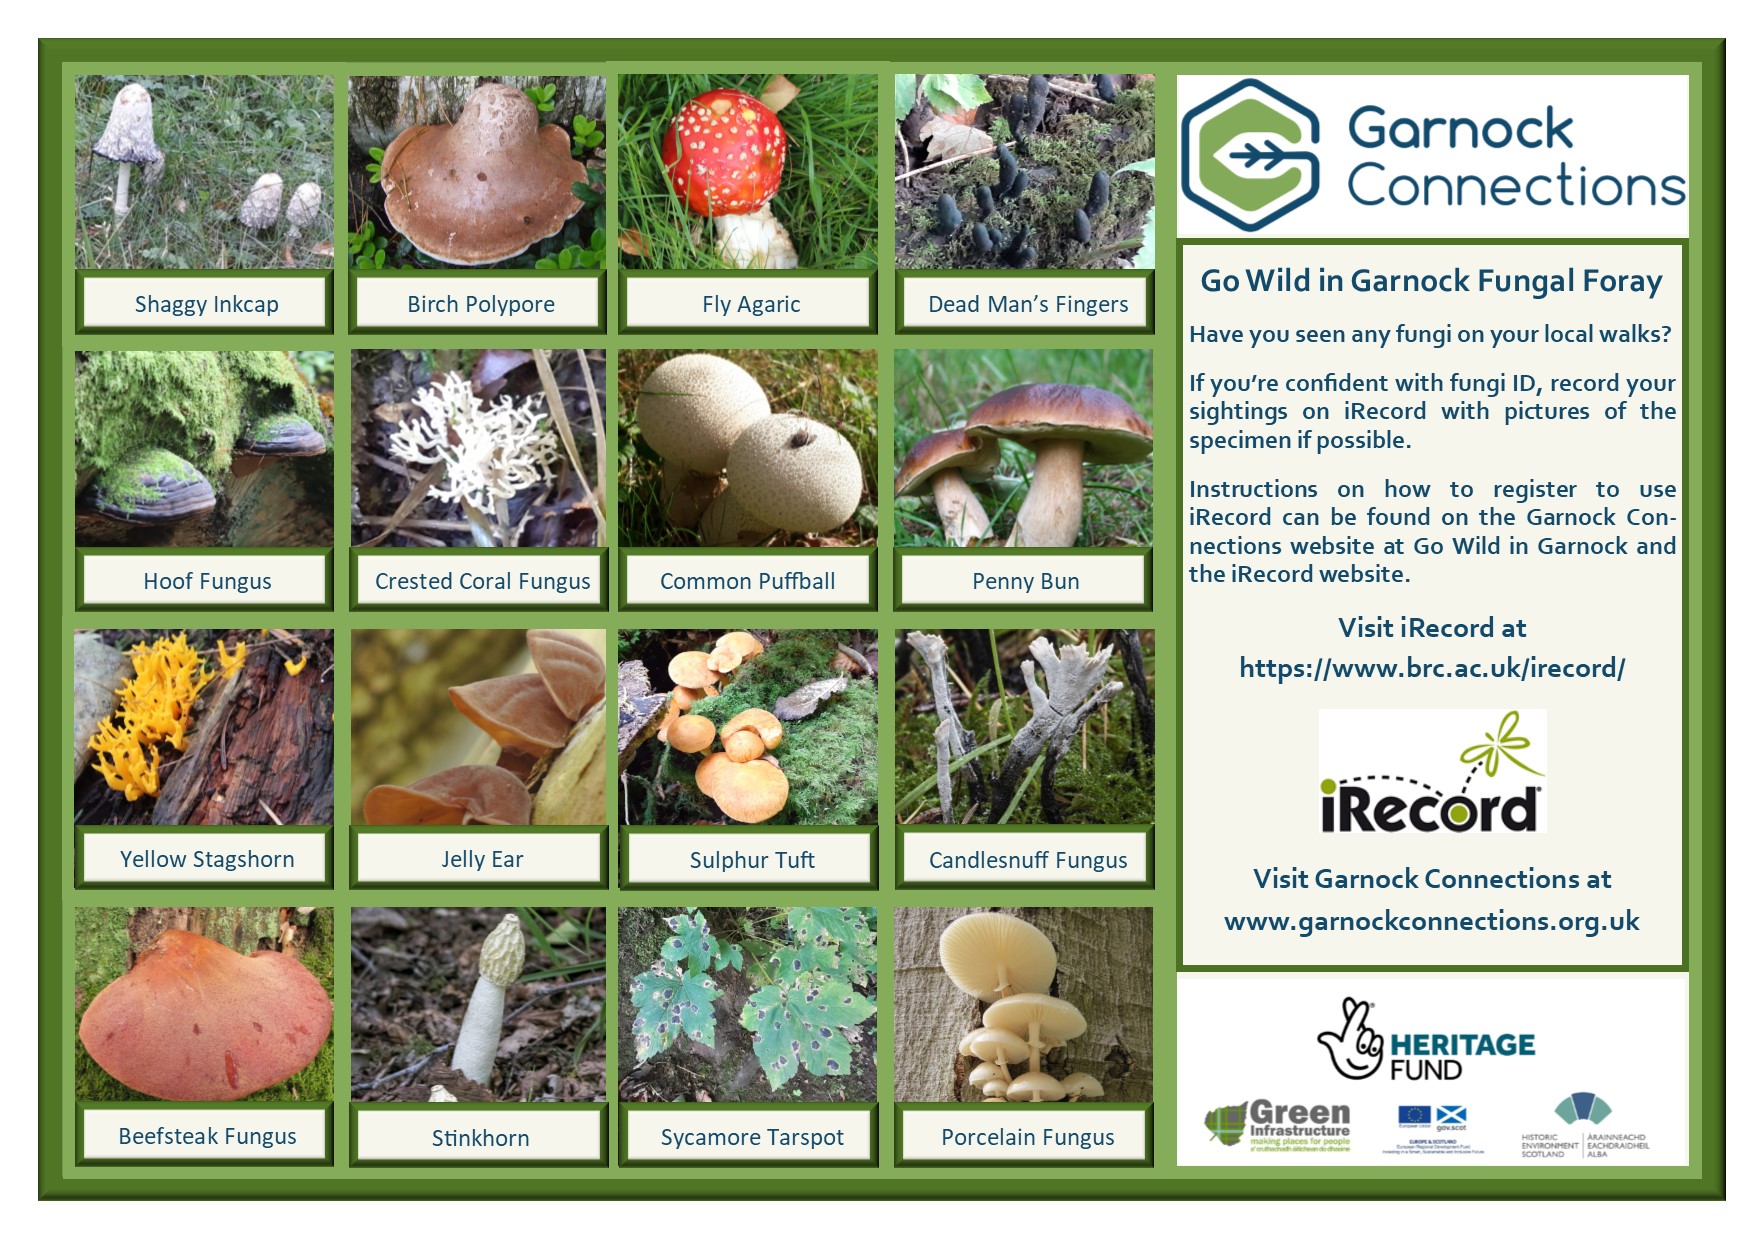 Go Wild in Garnock - Fungi Foray card image